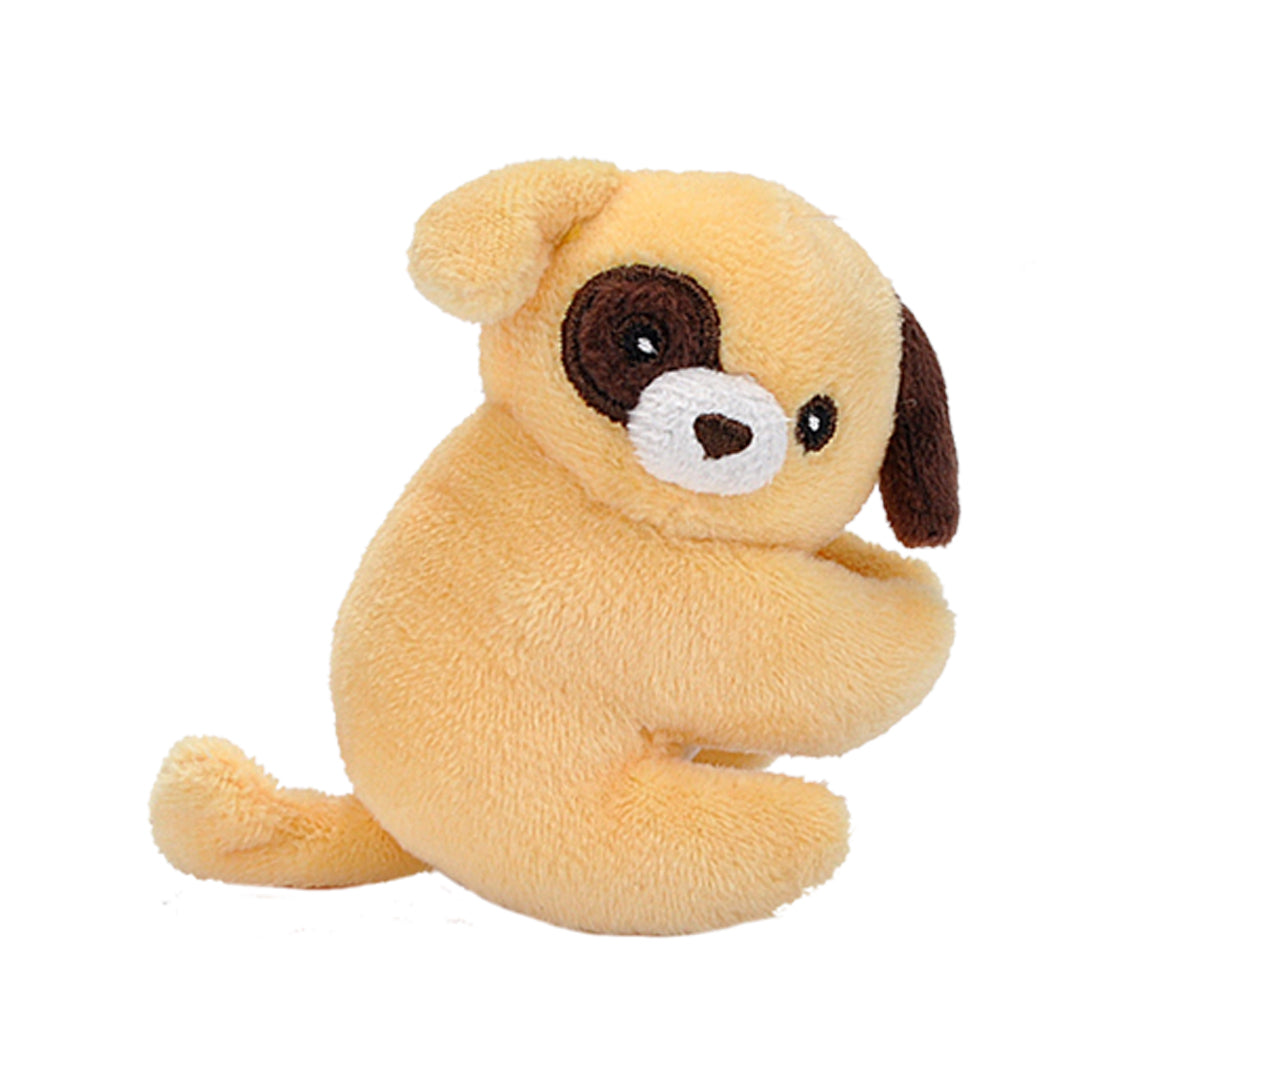 Clipkins Dog Stuffed Animal - 3"